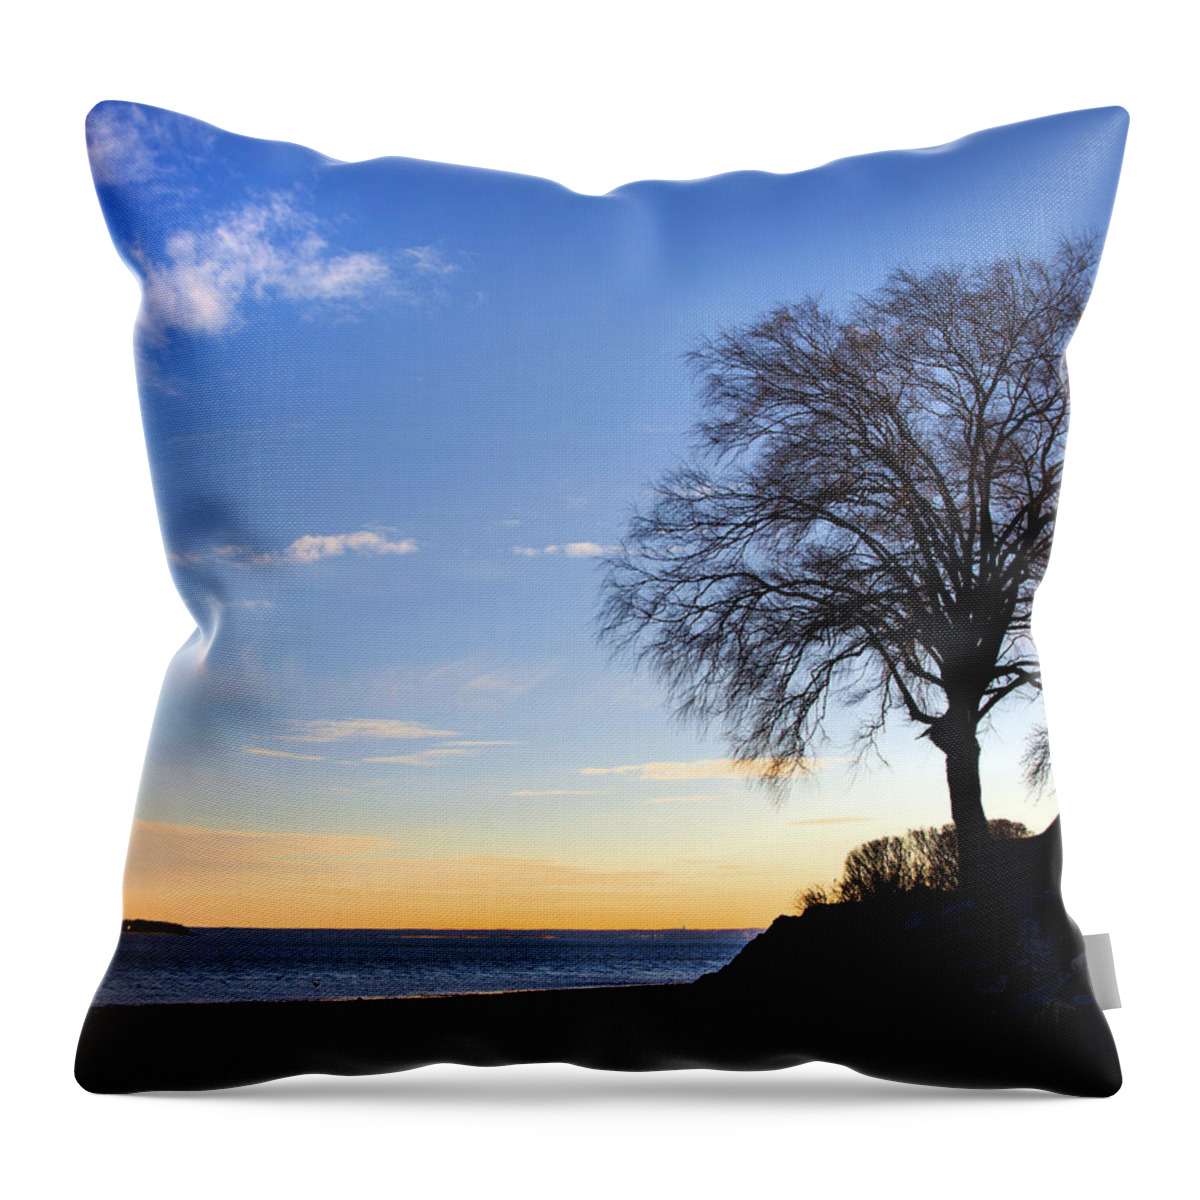 Duxbury Throw Pillow featuring the photograph Duxbury Sunset by Charles Harden